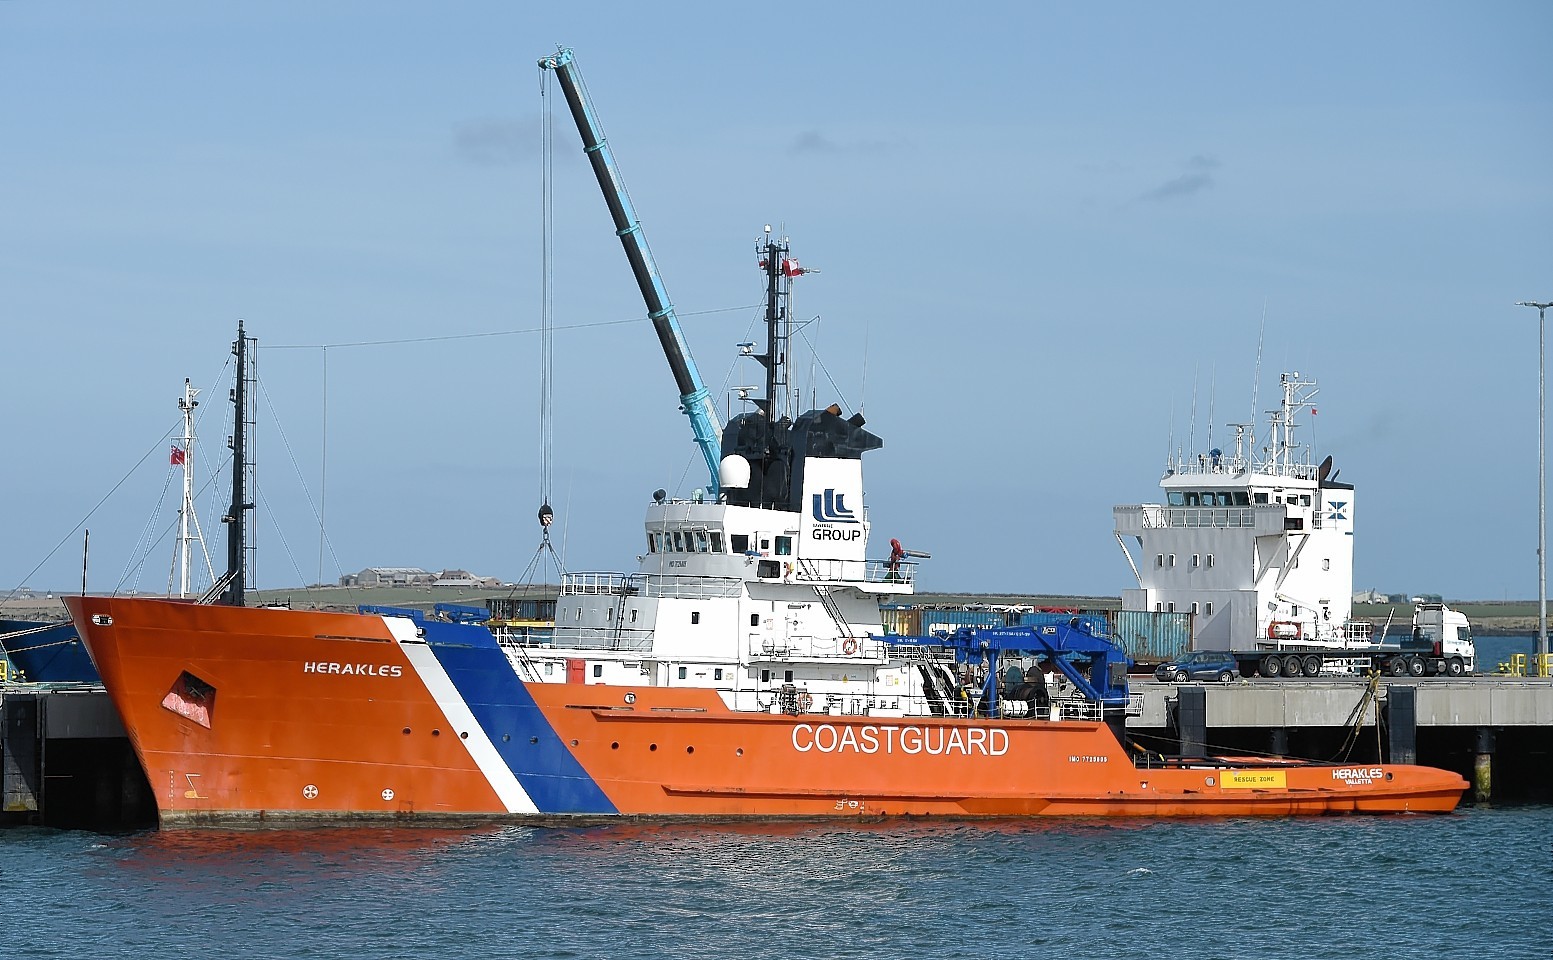 Herakles, based in Kirkwall, is the only emergency tug in north waters